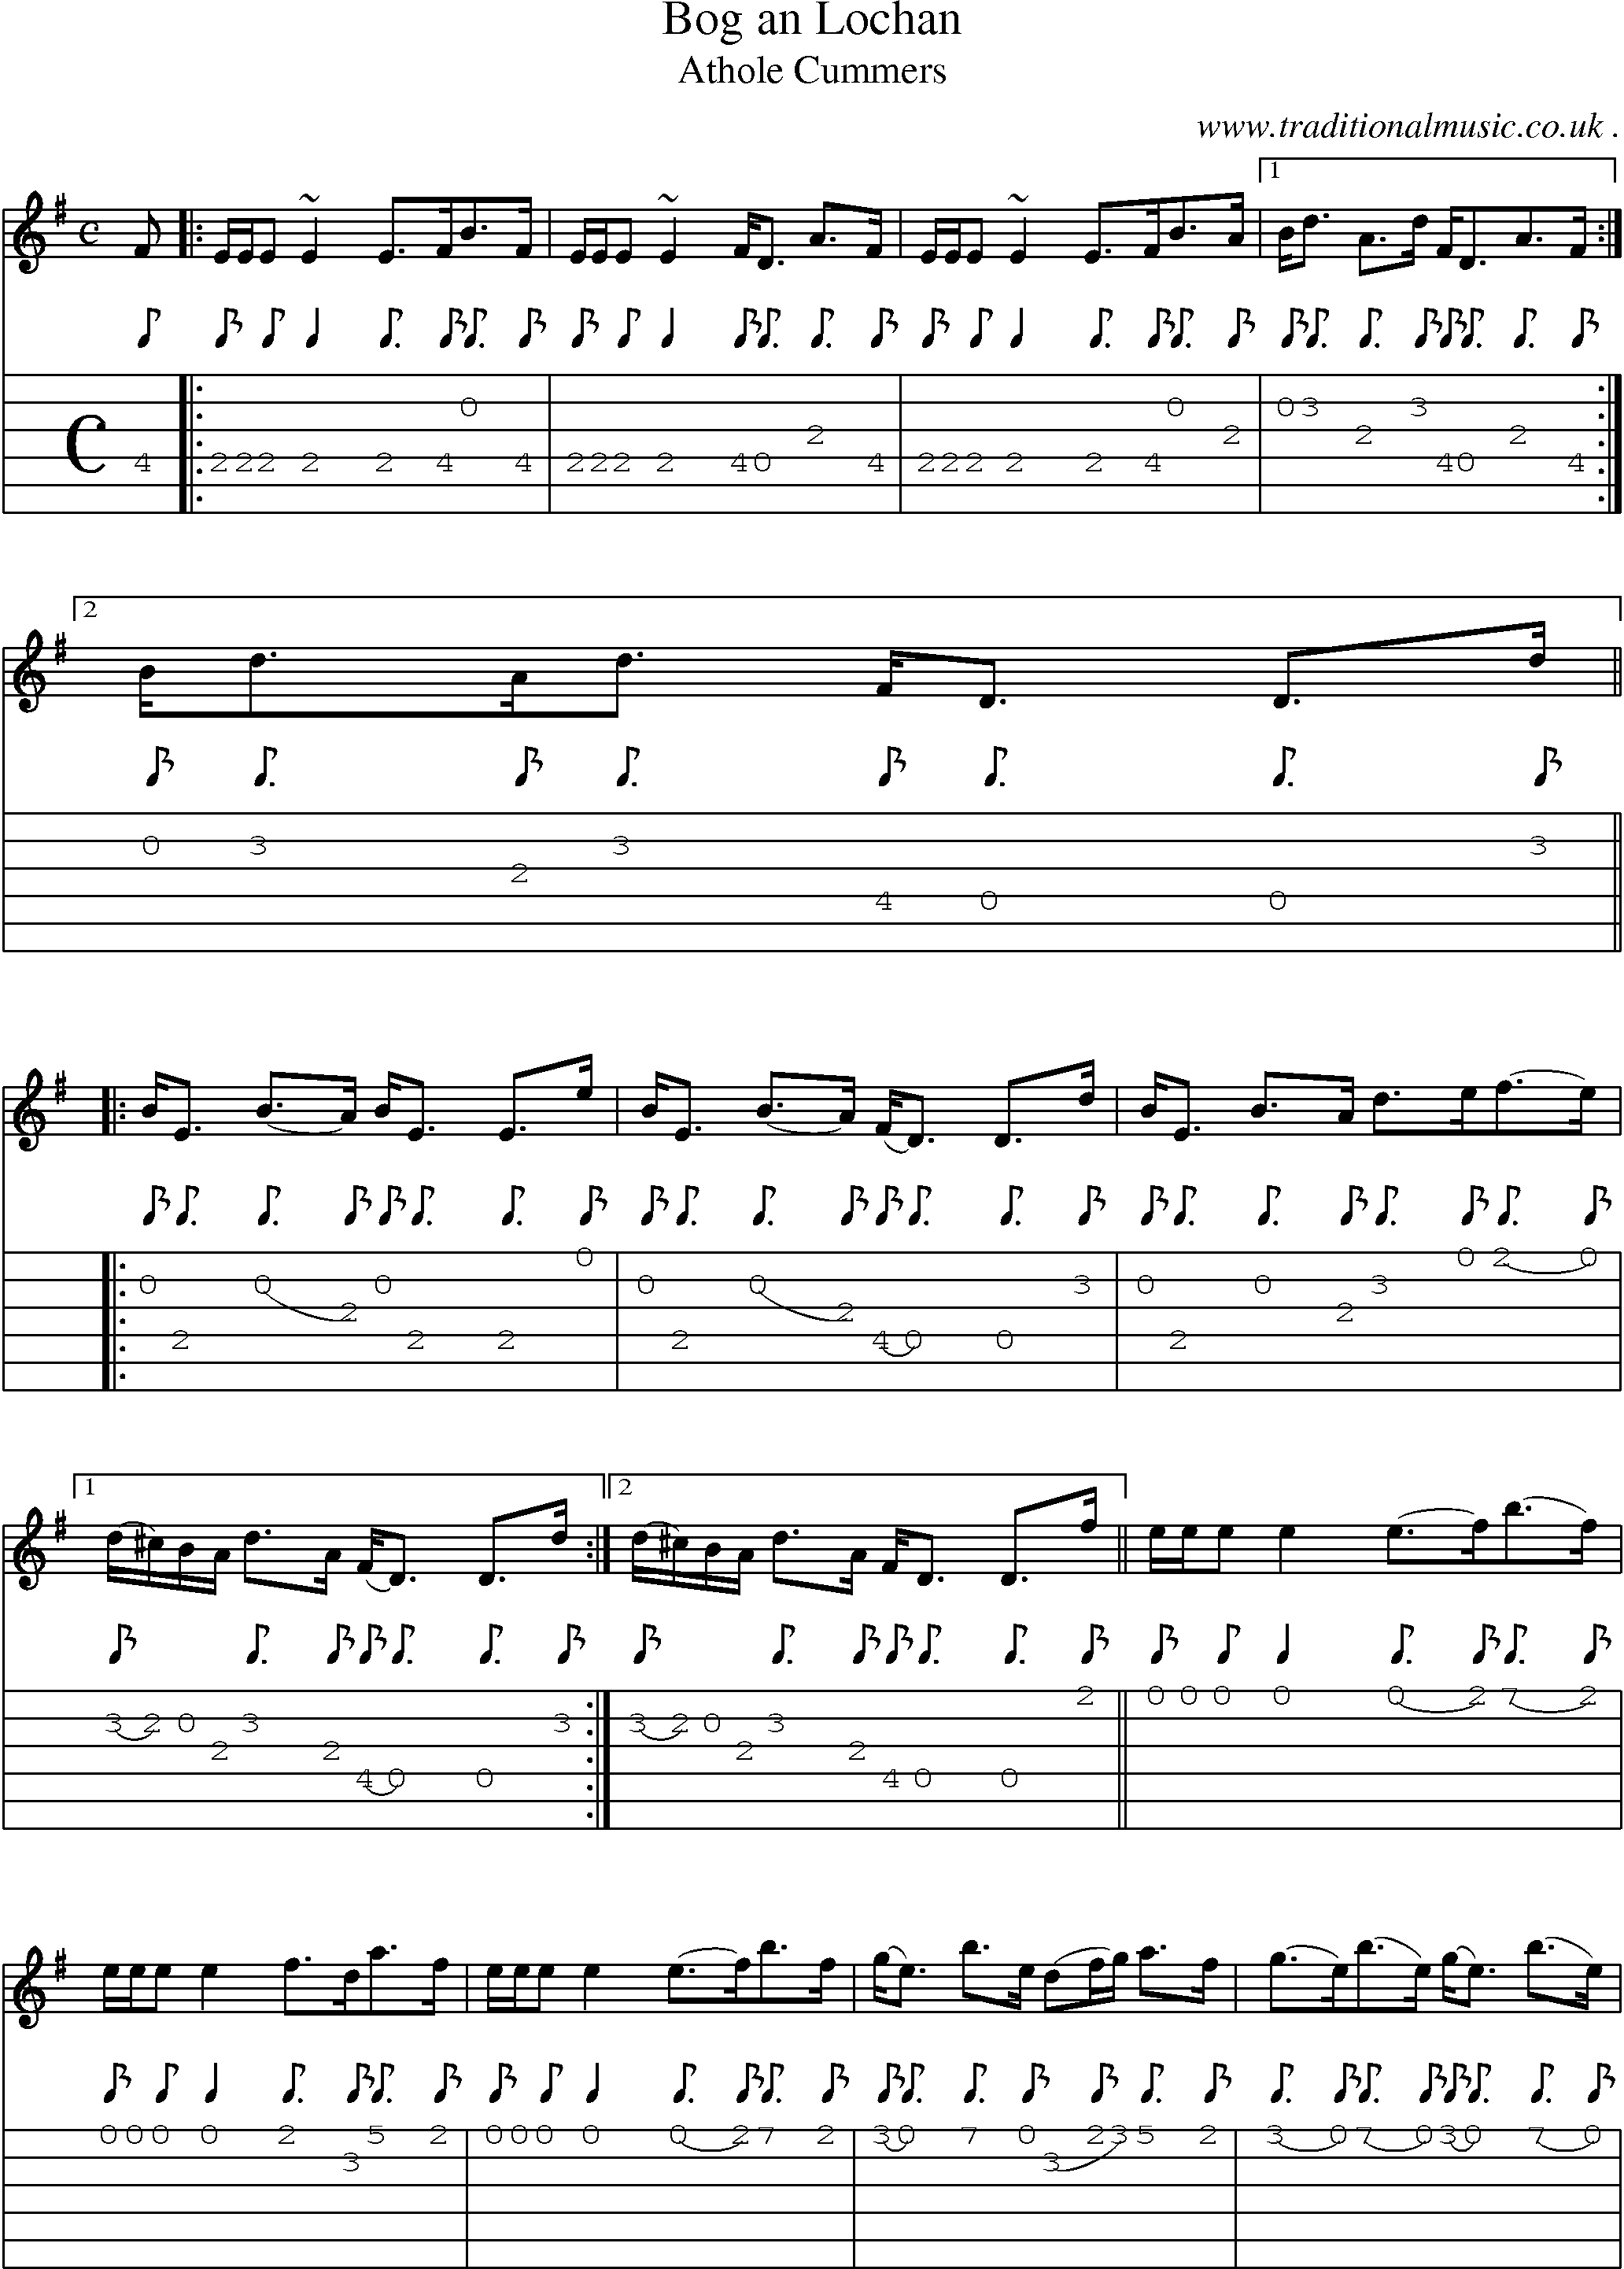 Sheet-music  score, Chords and Guitar Tabs for Bog An Lochan